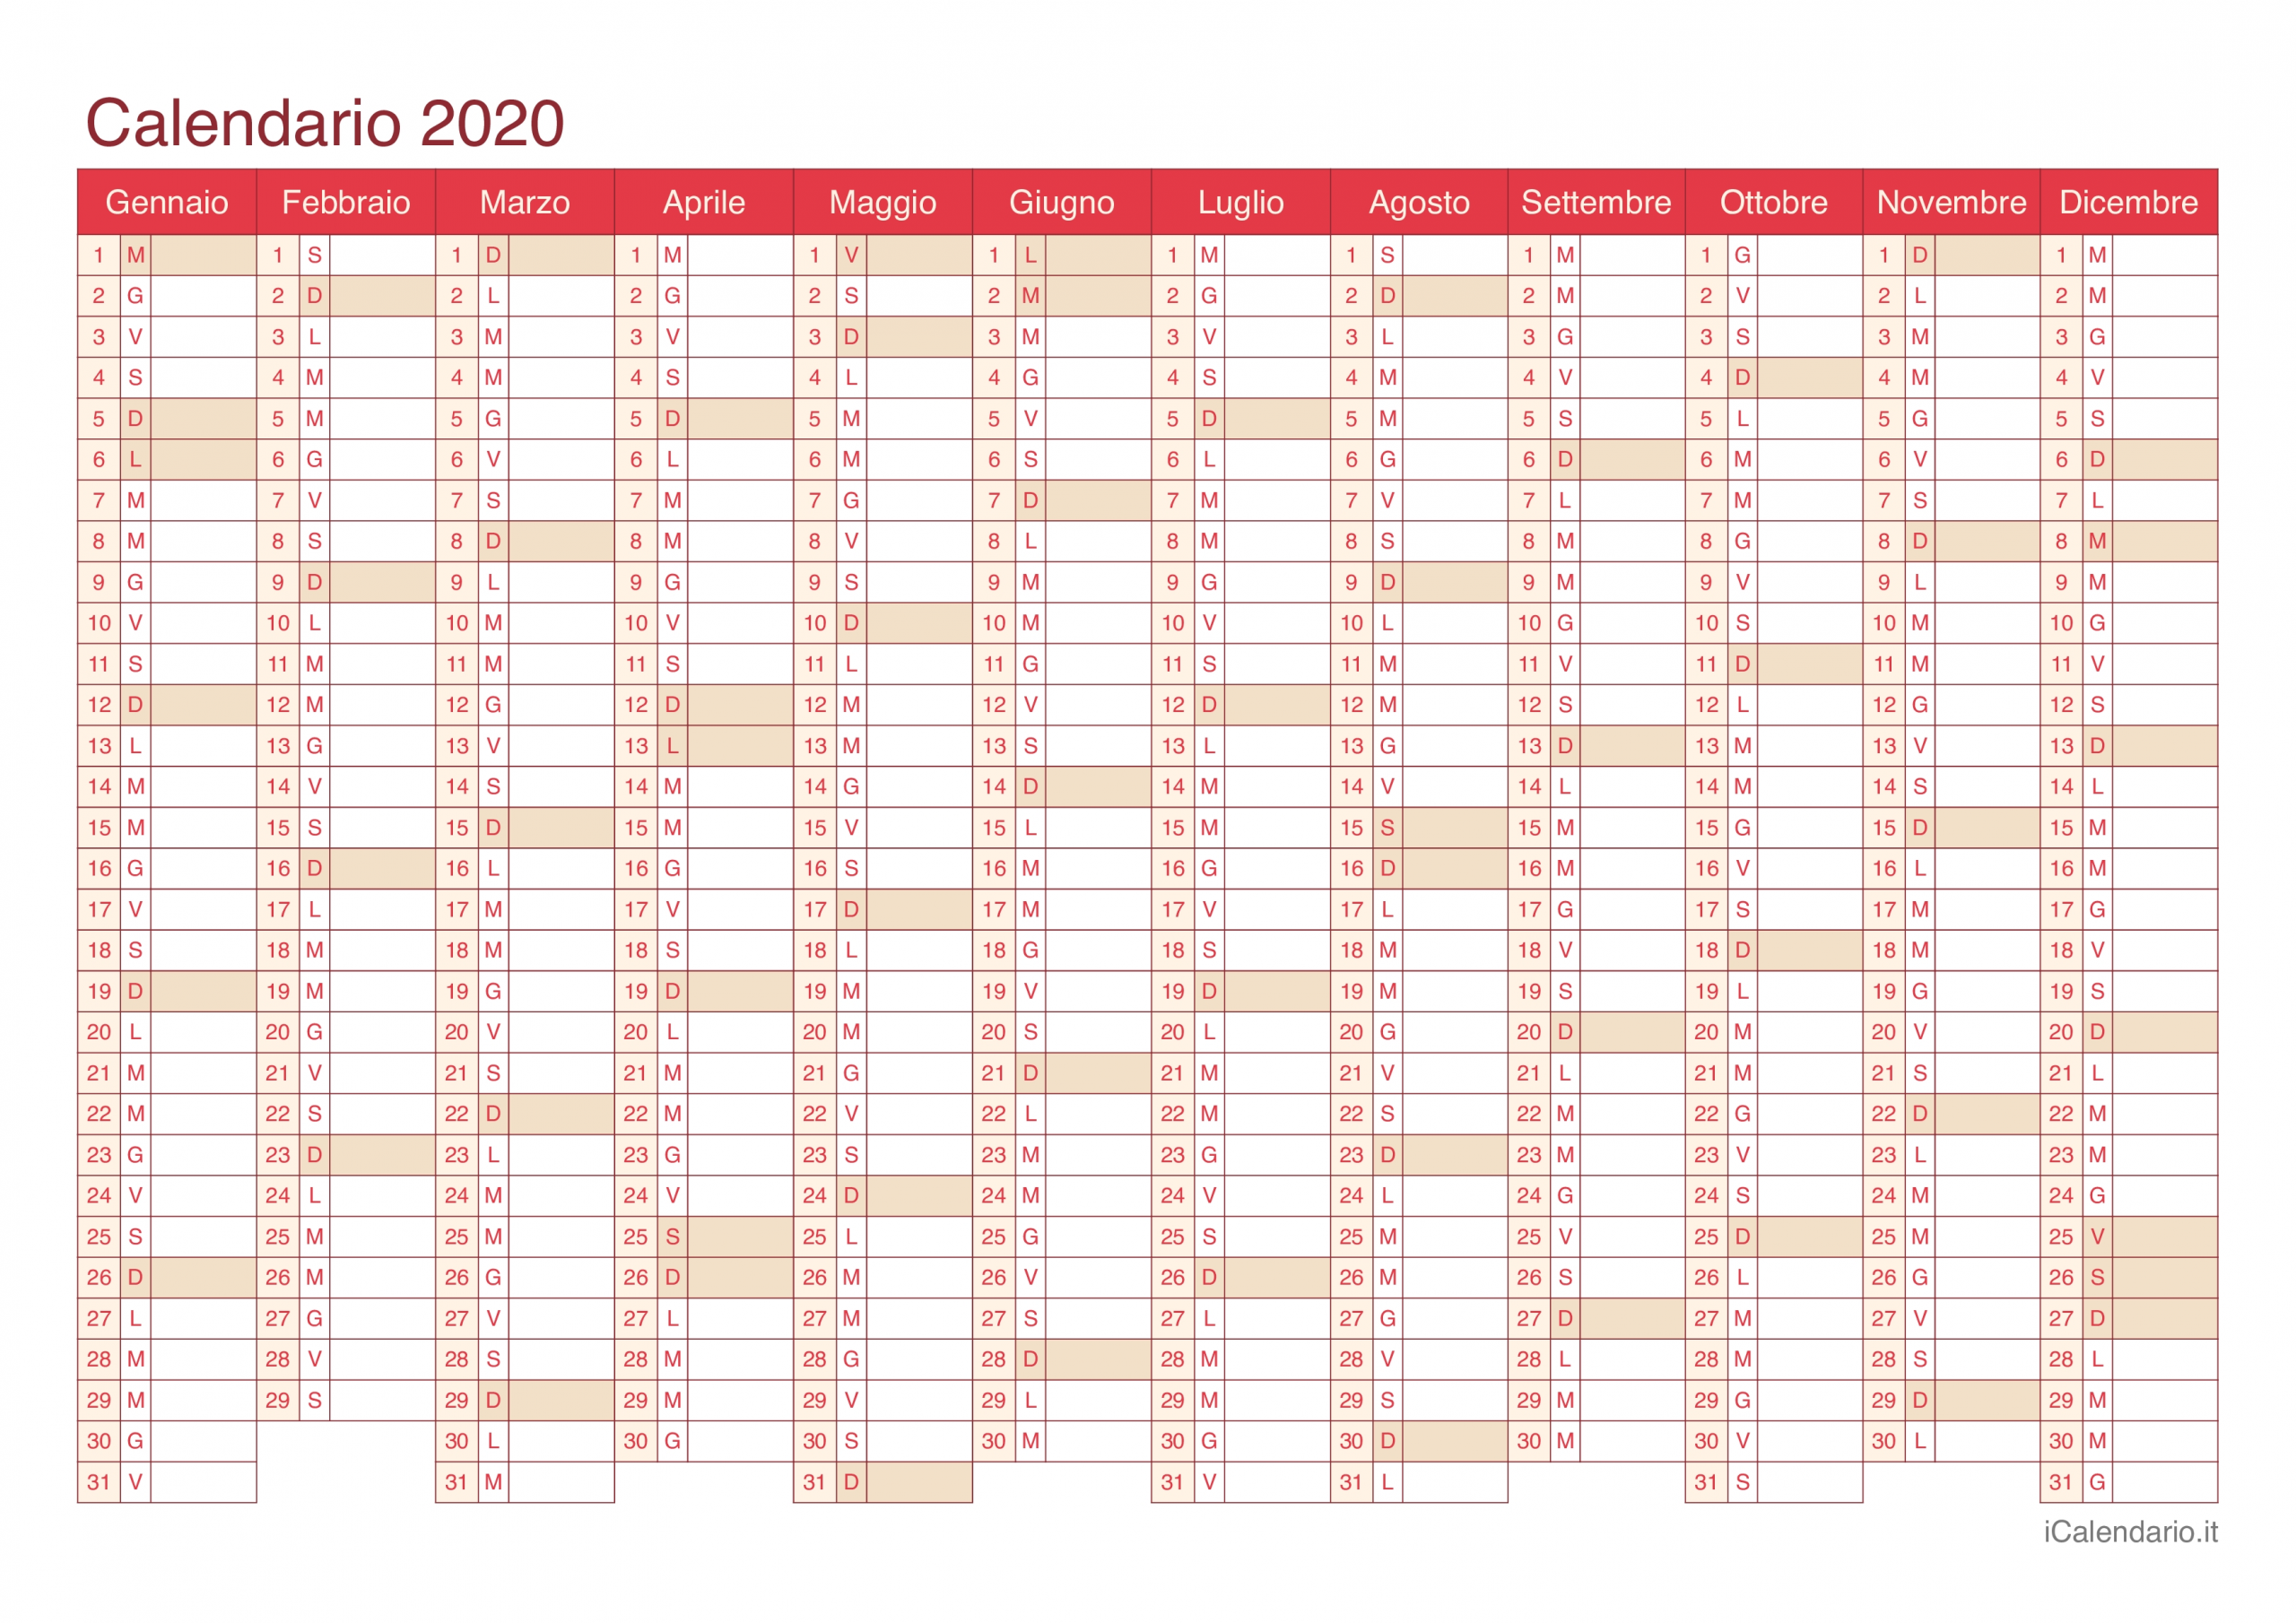 Calendario 2020 Da Stampare - Icalendarioit